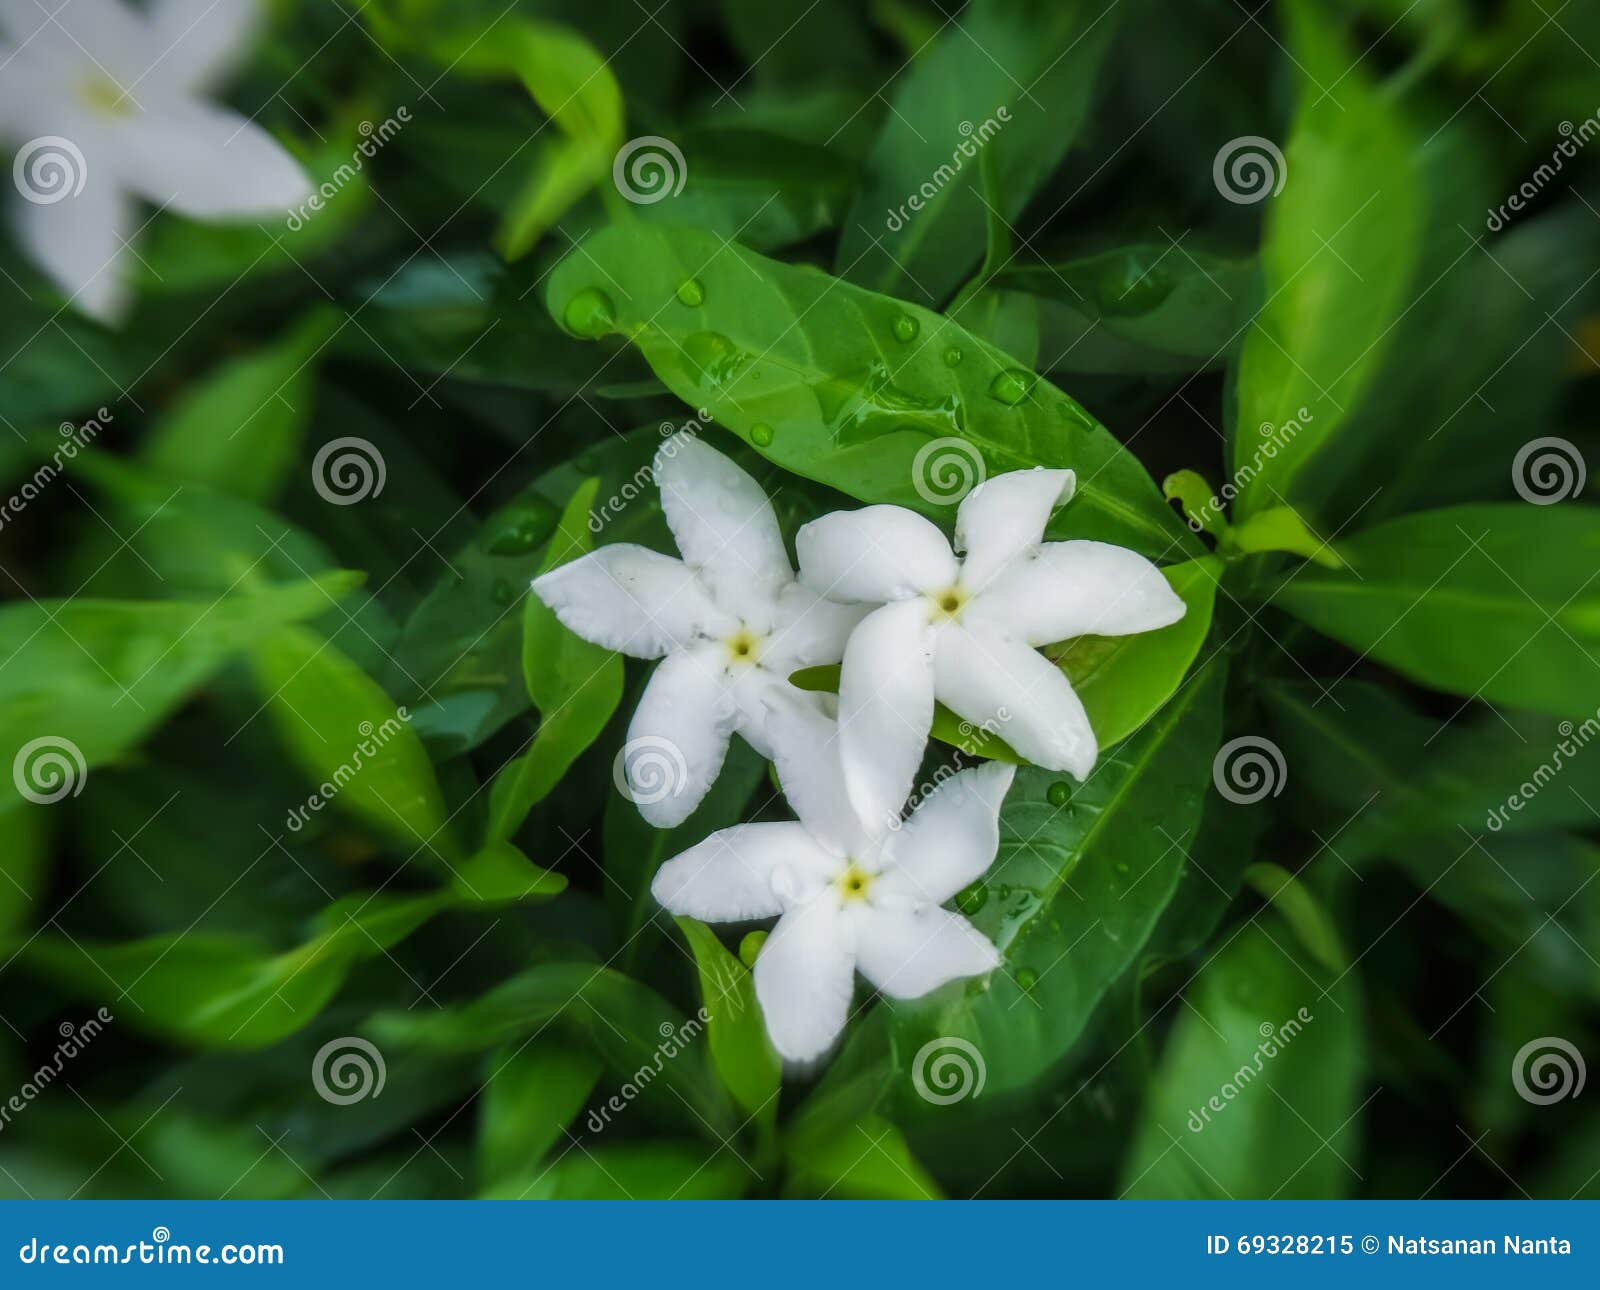 arabian jasmine flowers